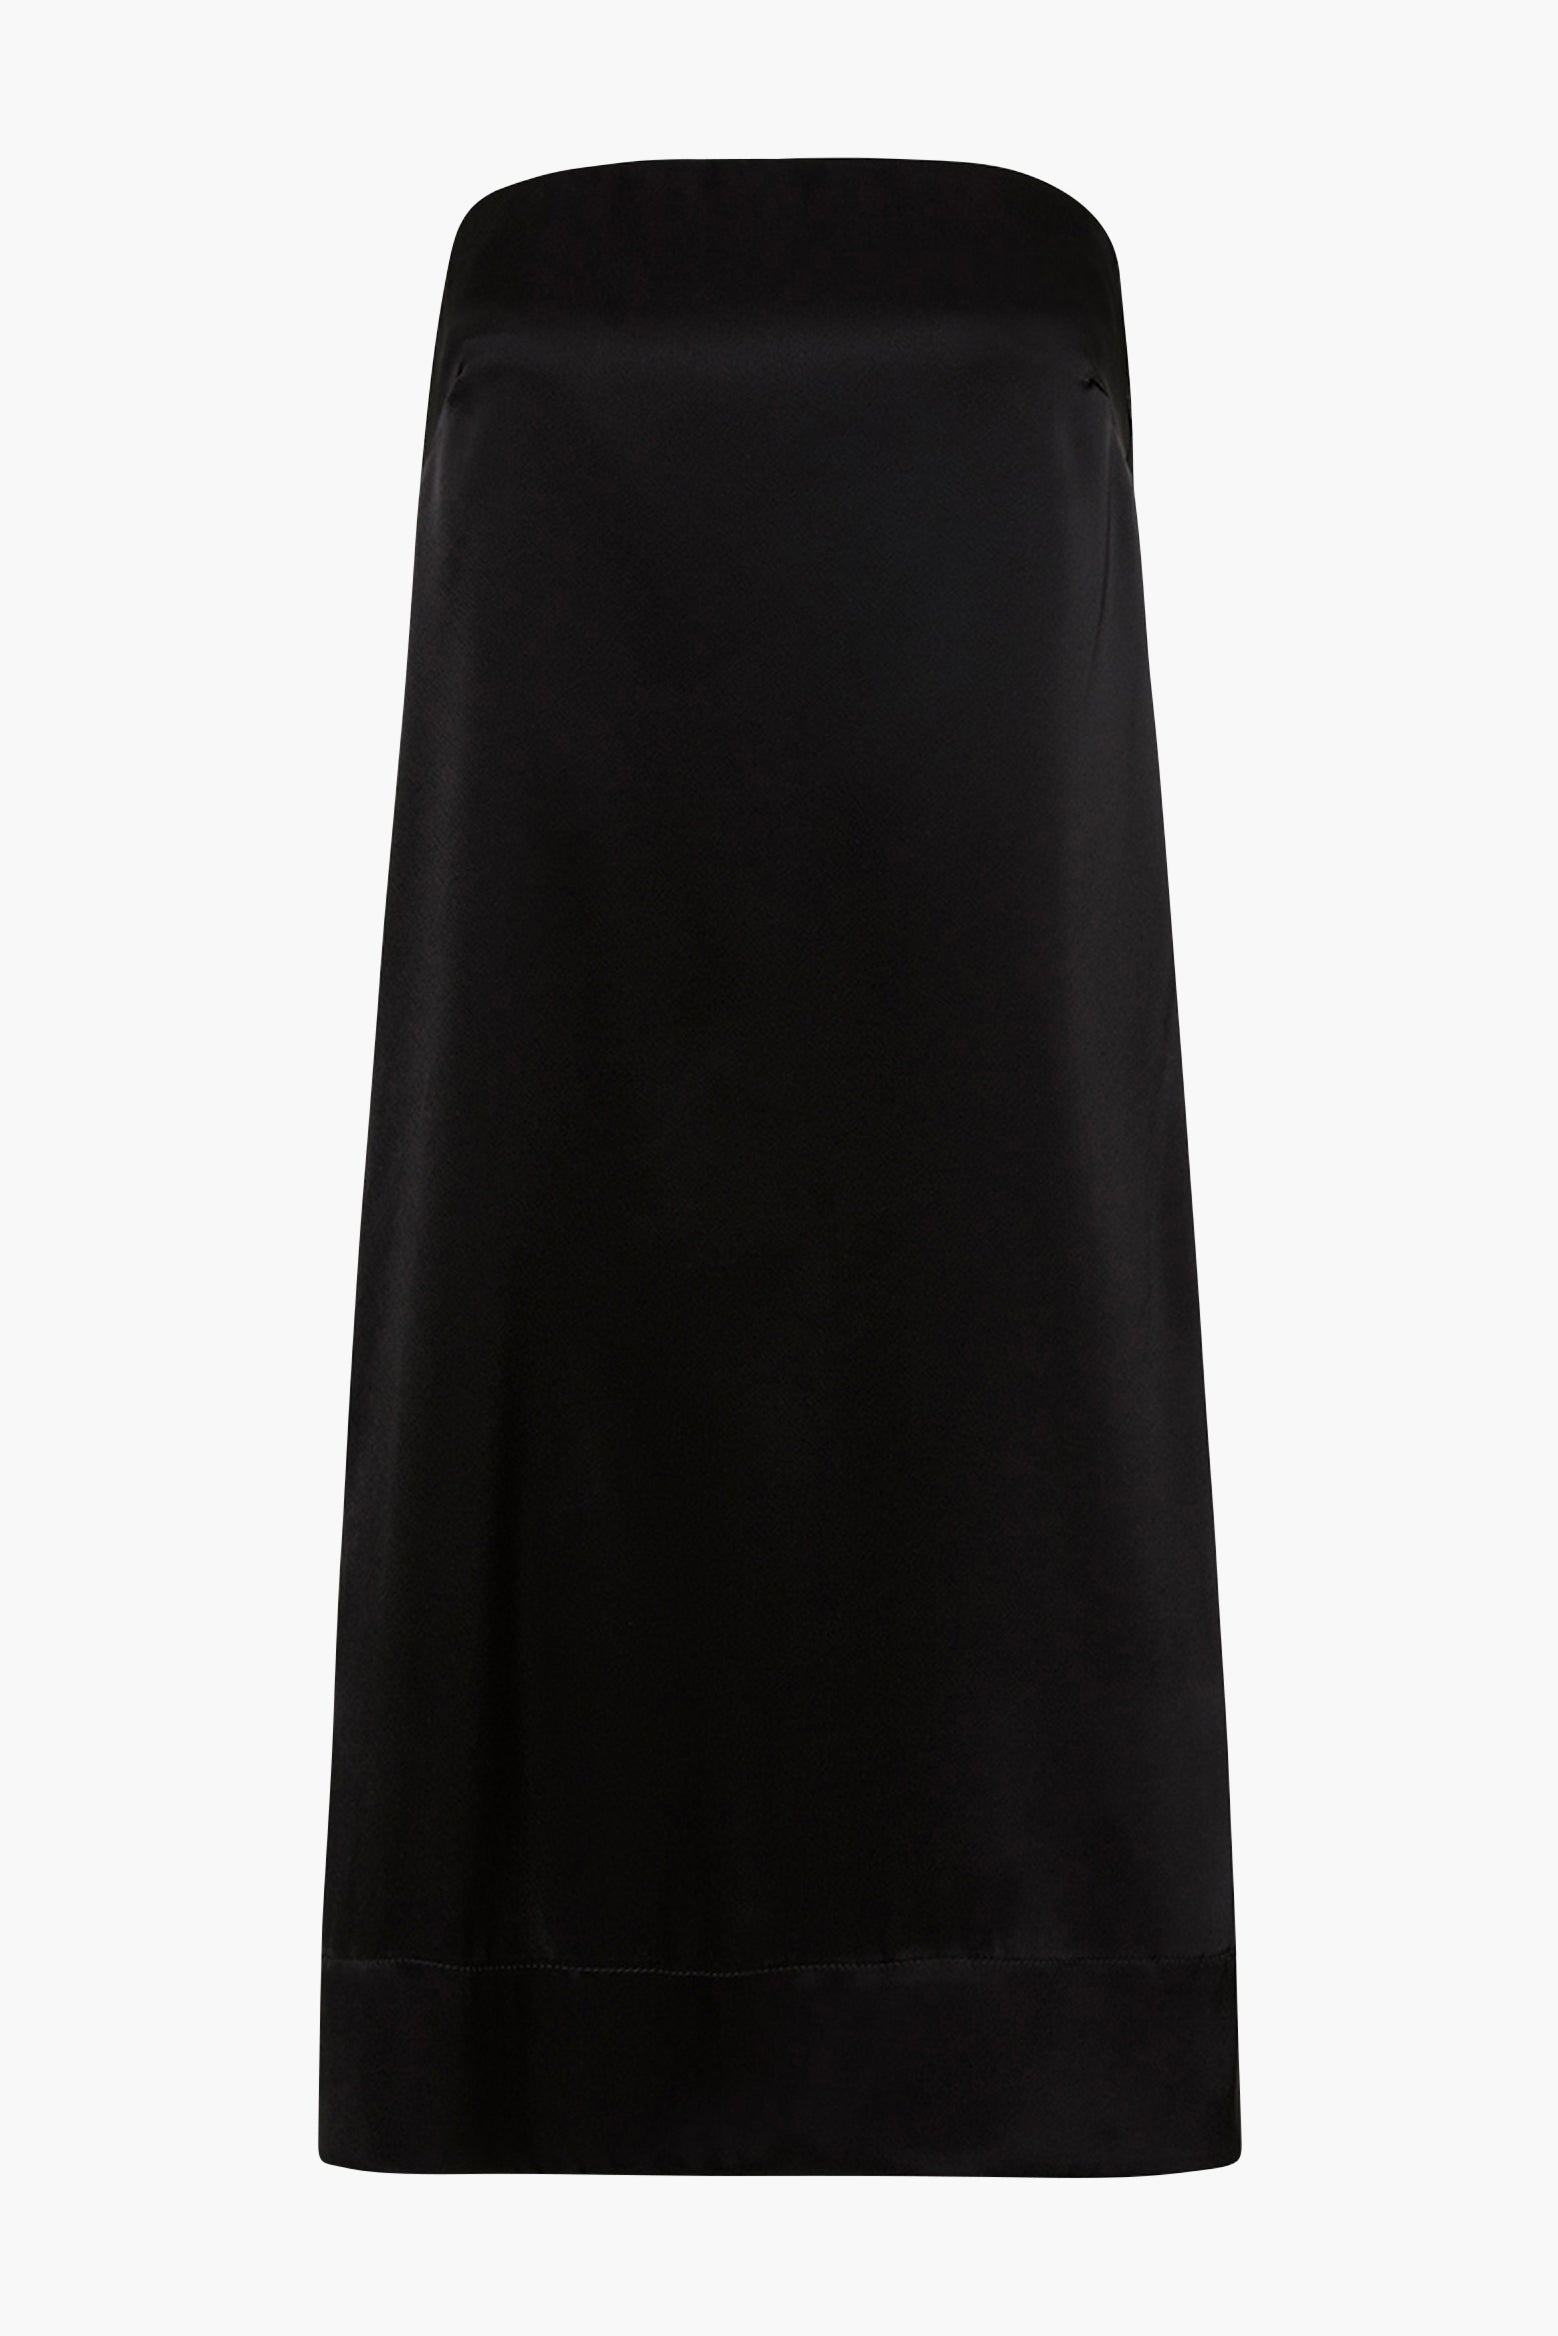 Esse Mono Column Mini Dress in Black available at TNT The New Trend Australia.